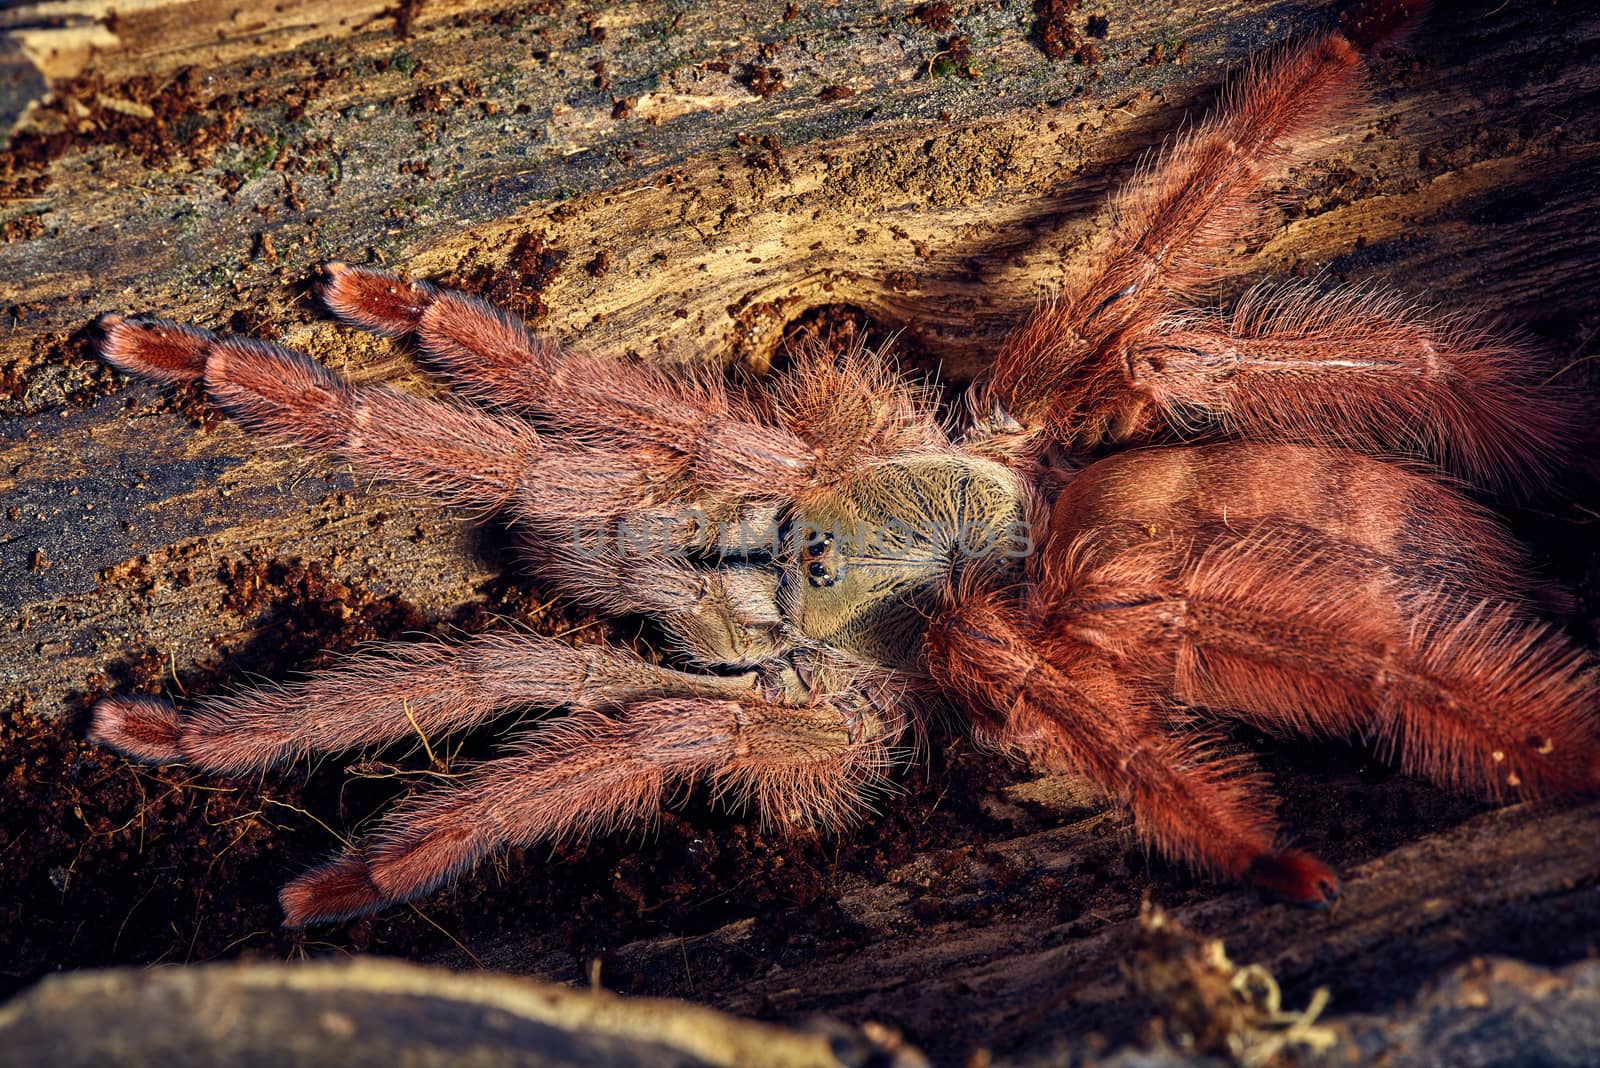 tarantula Tapinauchenius gigas by master1305